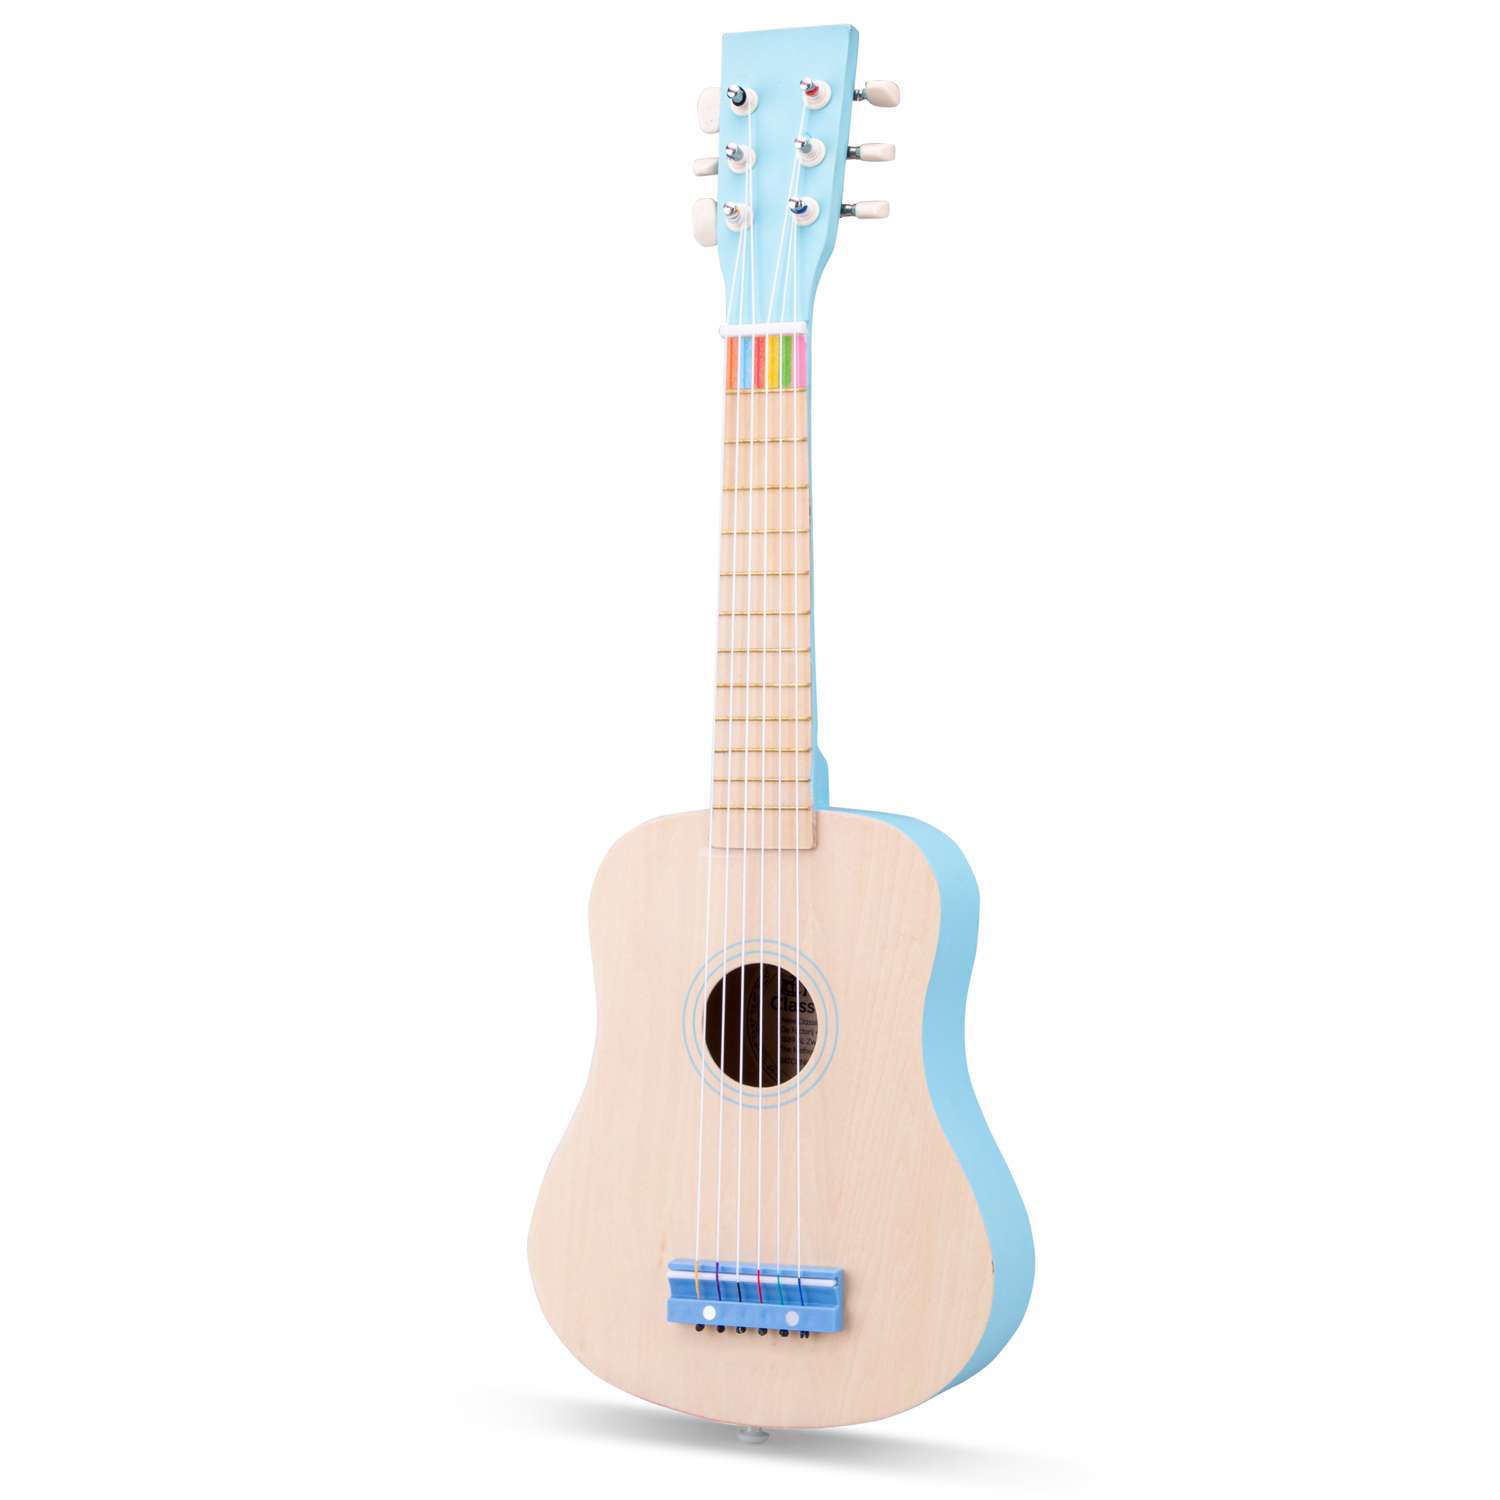 Гитара New Classic Toys 64 см. голубая 10301 - фото 2